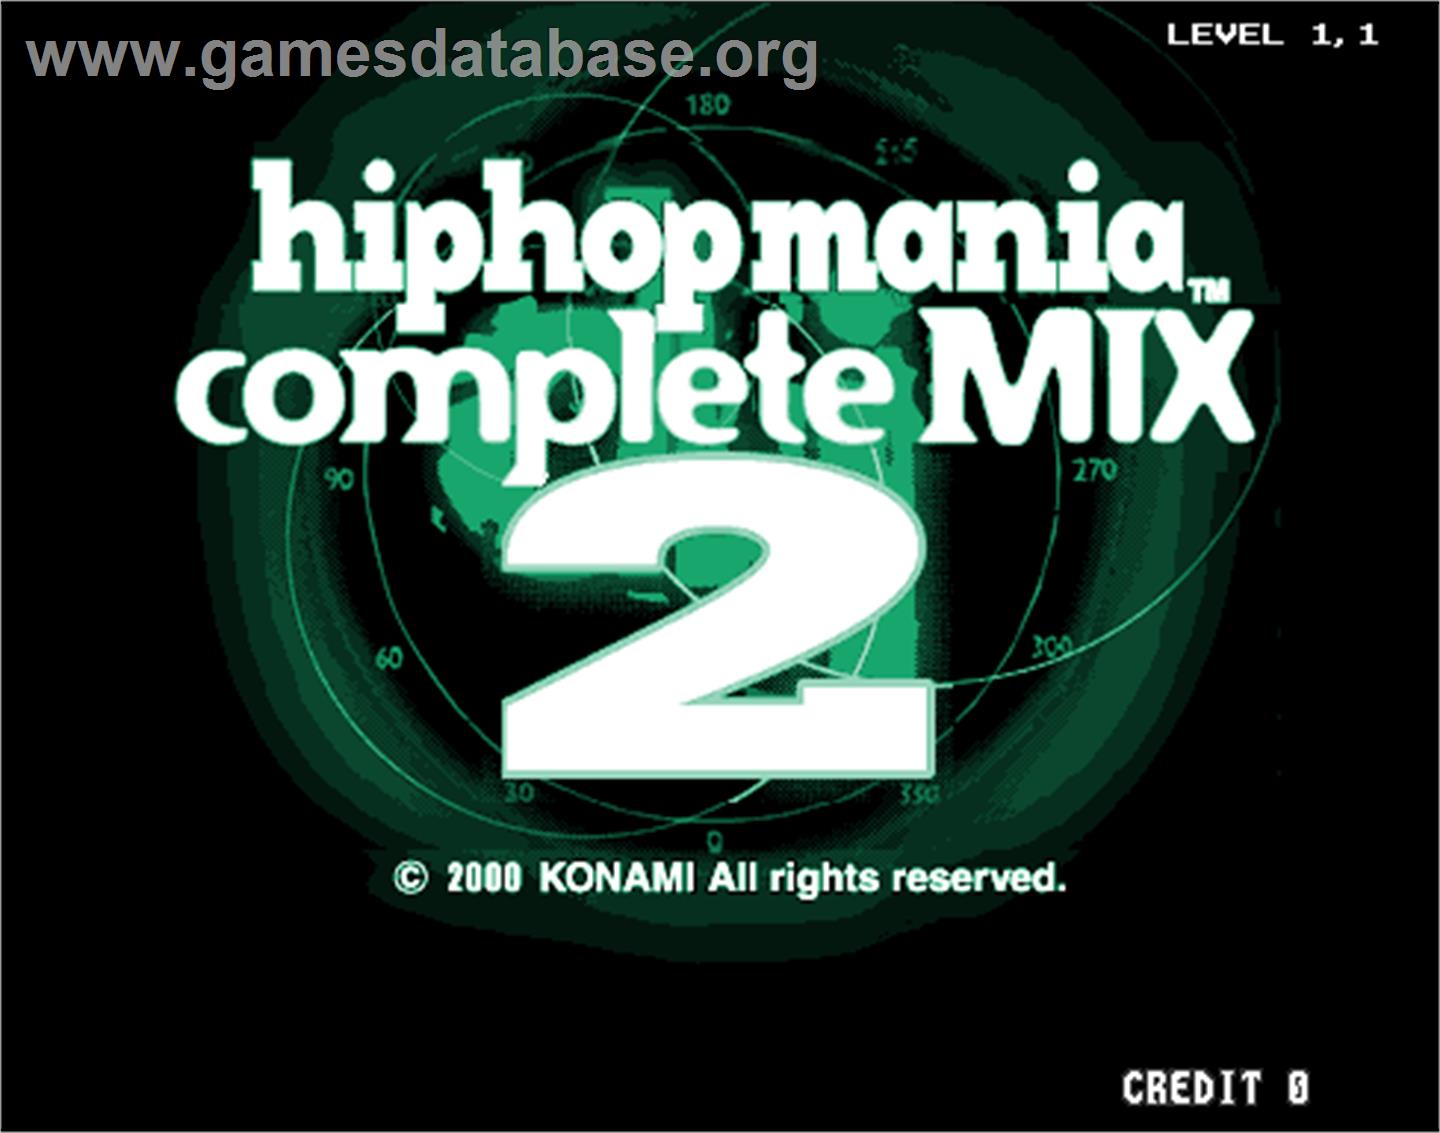 hiphopmania complete MIX 2 - Arcade - Artwork - Title Screen